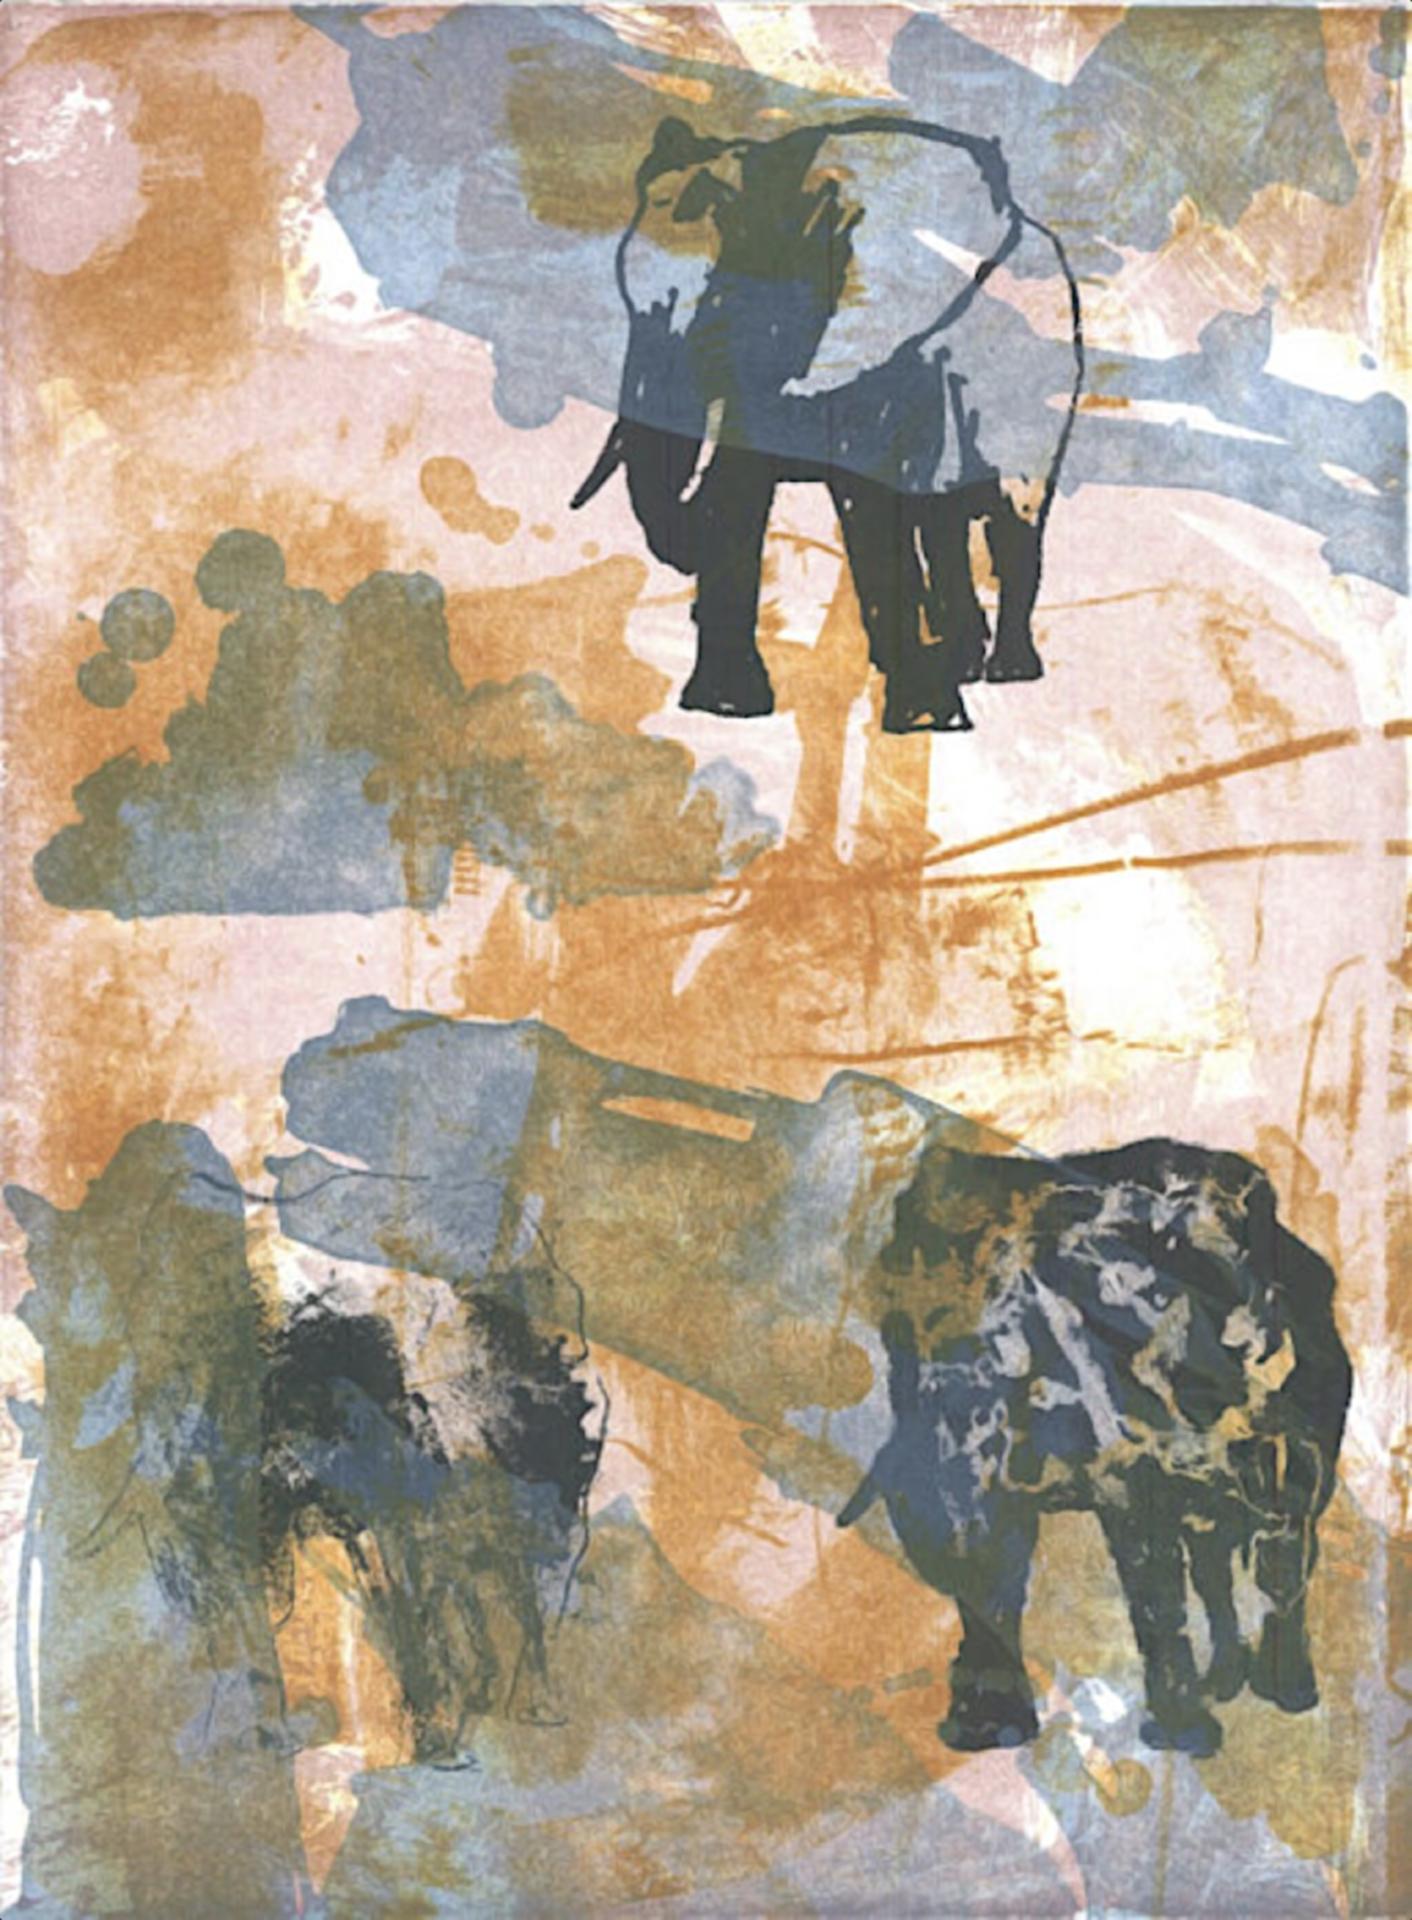 Klaus Zwick - "Lithography honours the Elephants" - colour lithograph